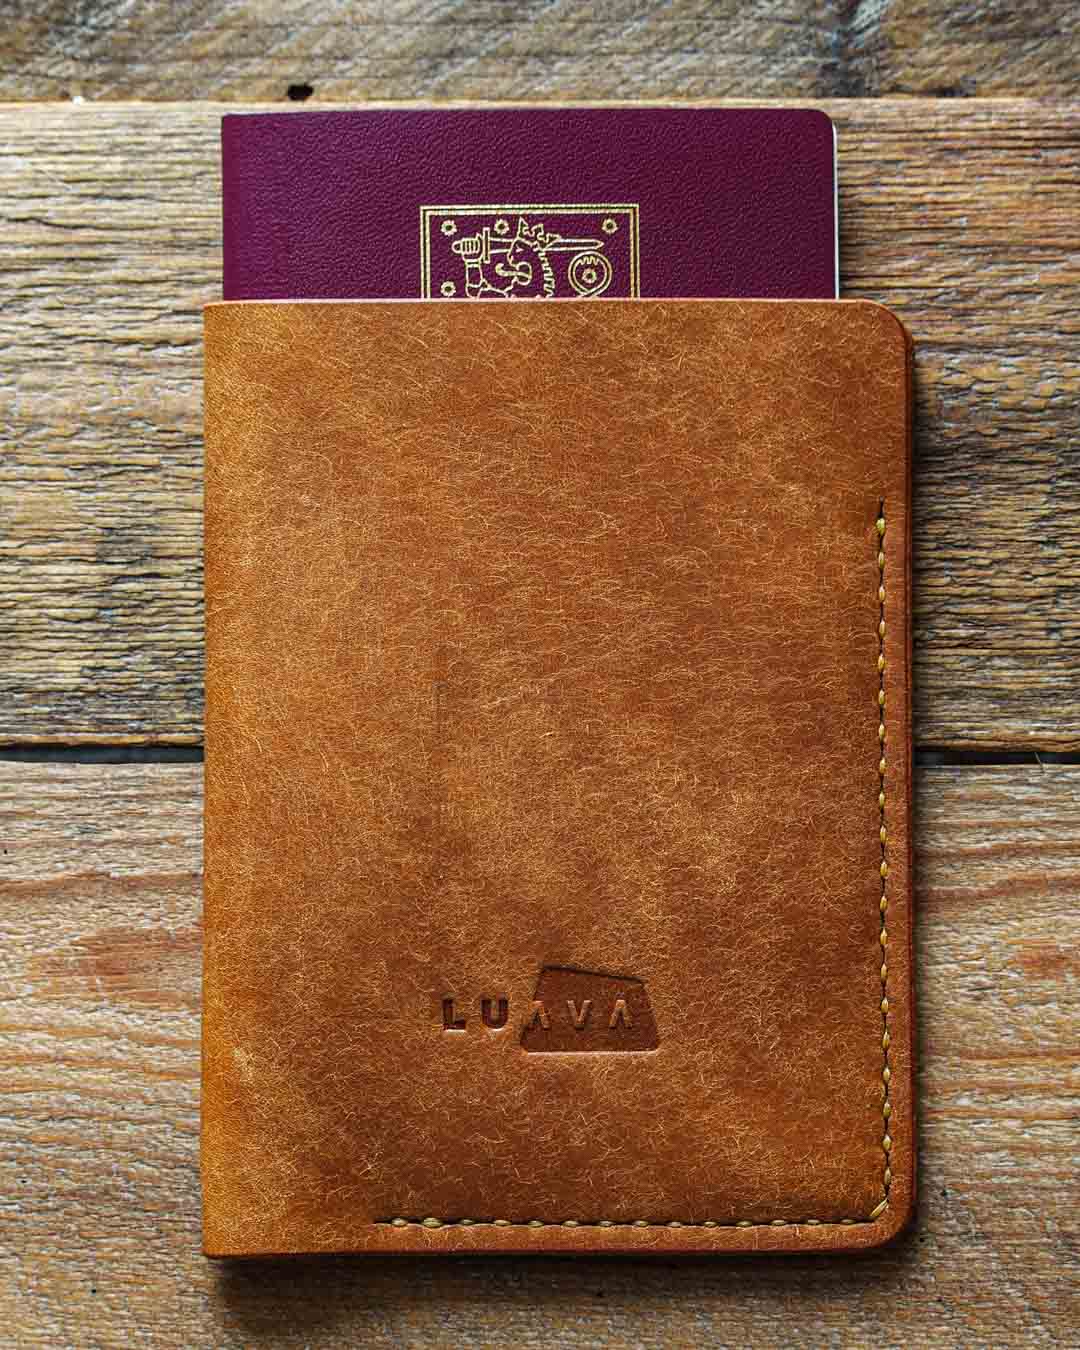 Luava handcrafted leather passport cover pueblo cognac in use